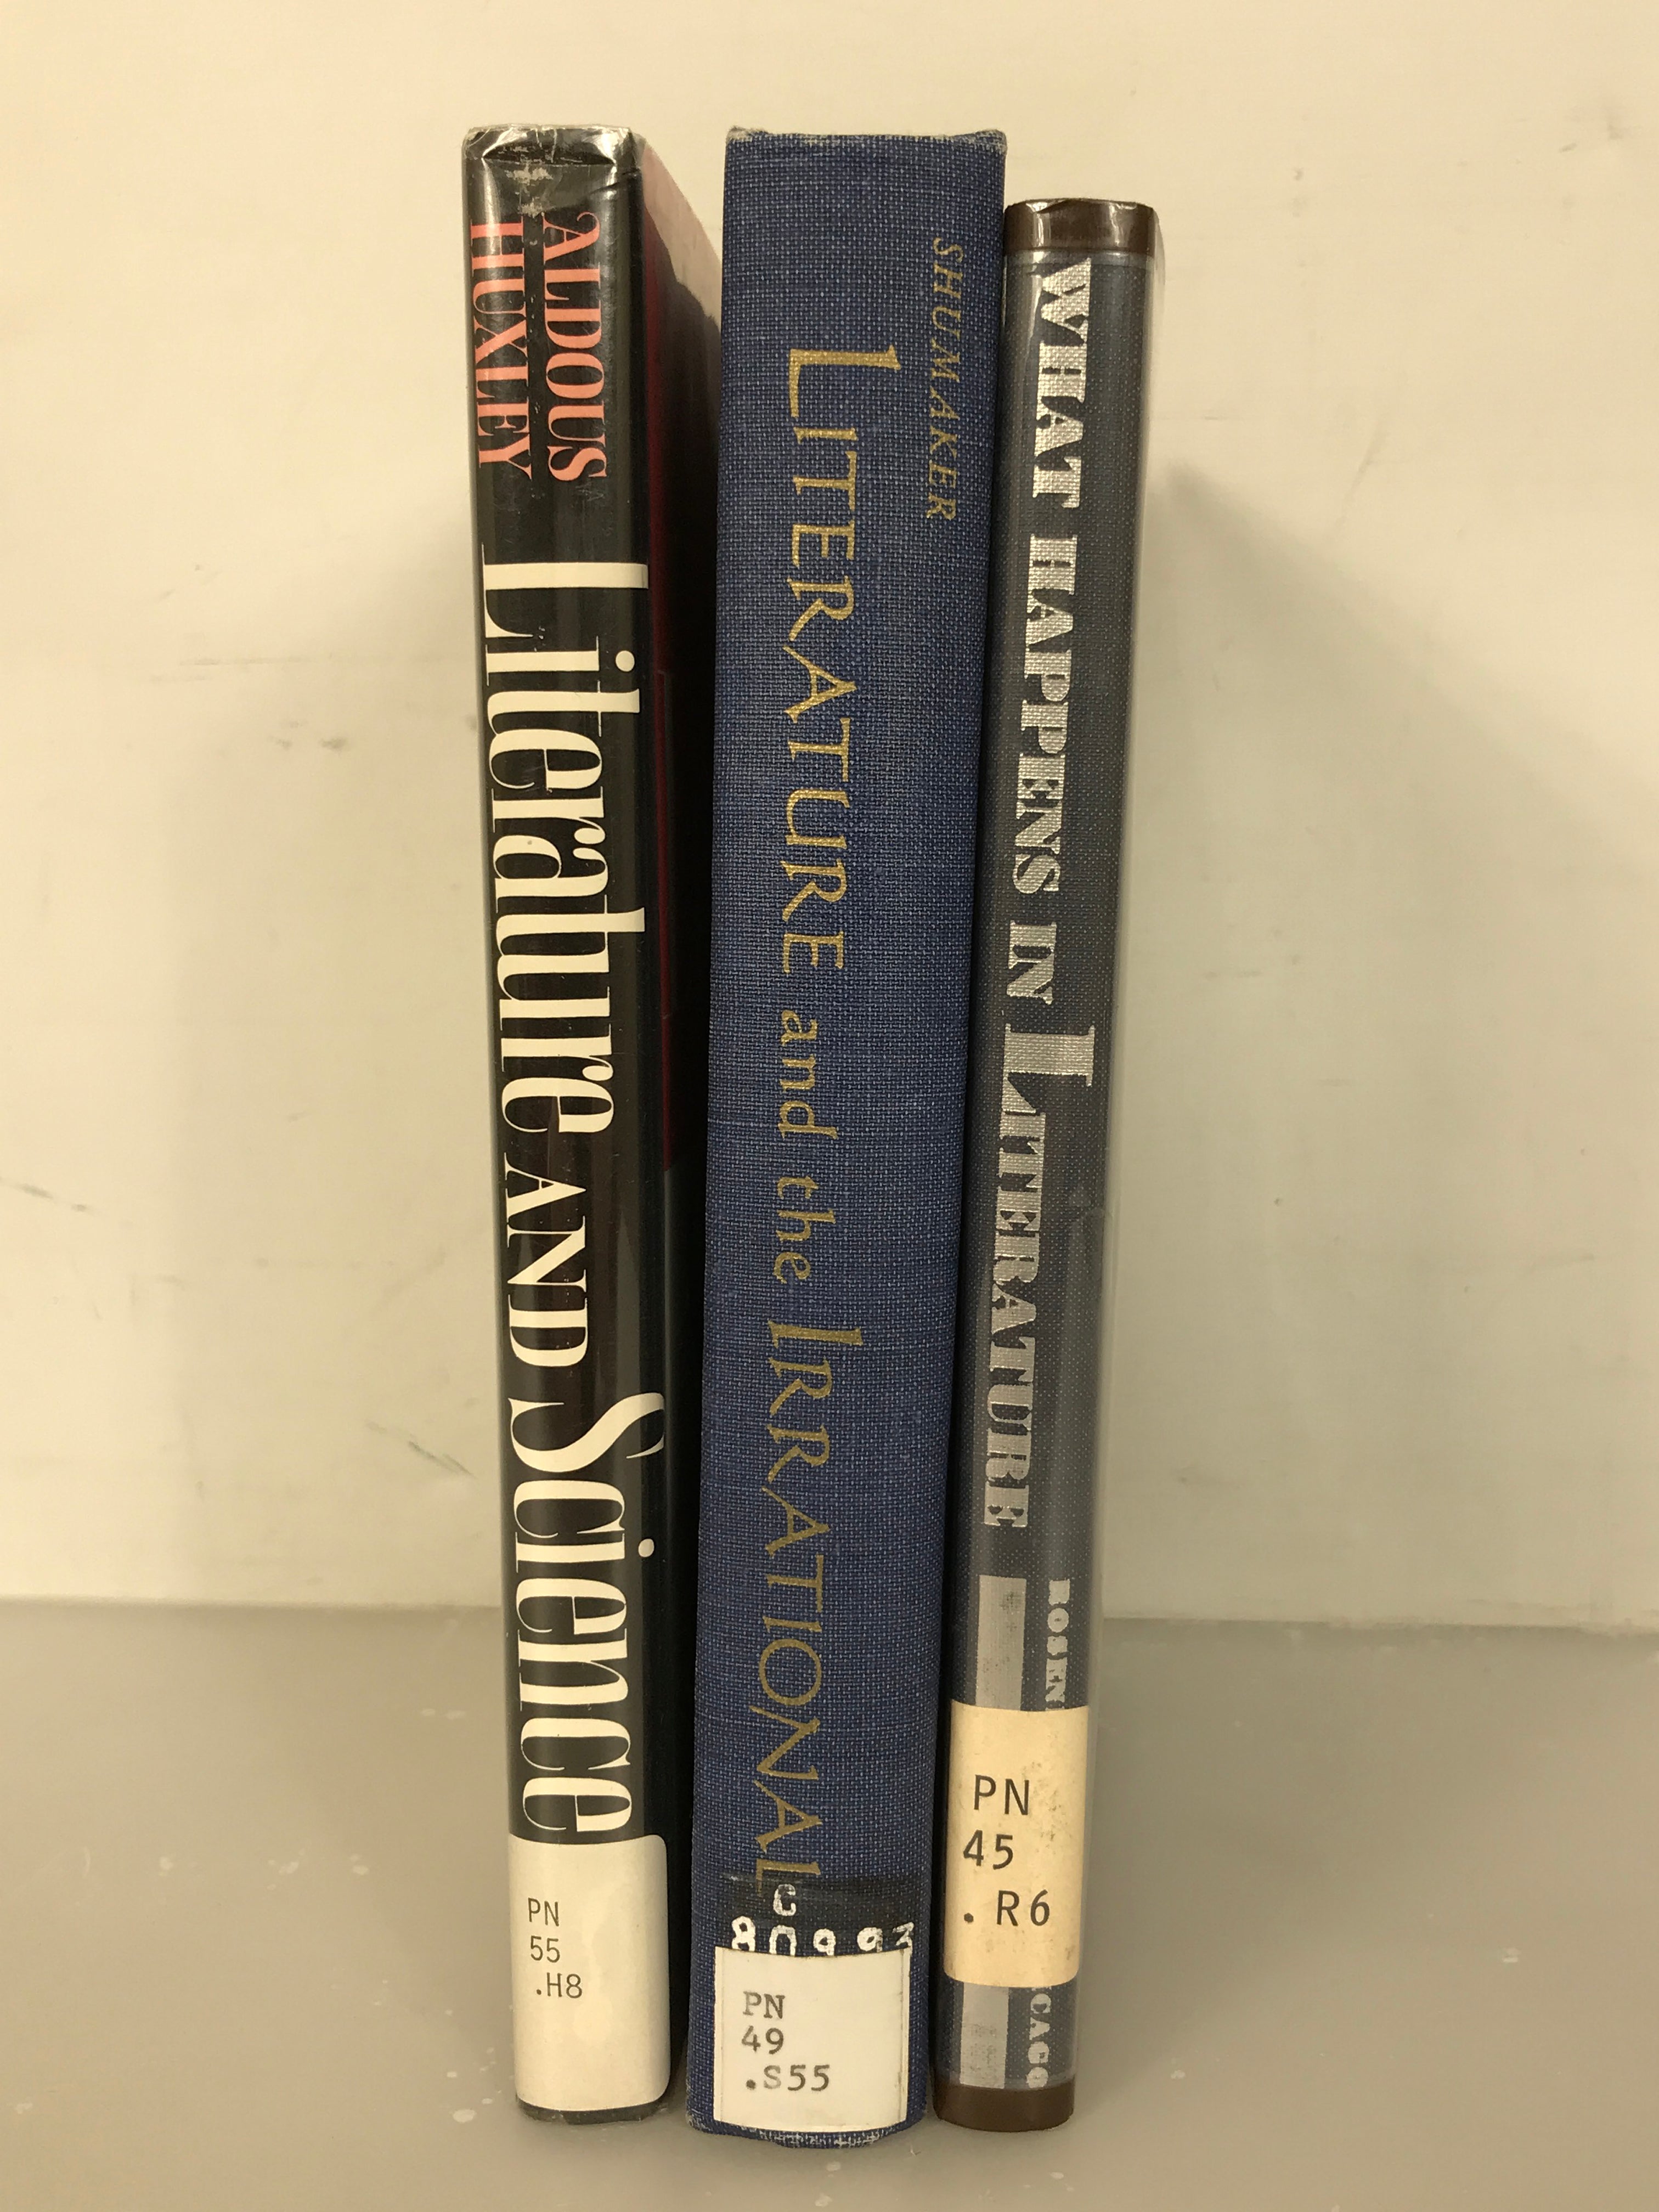 Lot of 3 Literary Studies Books 1960-1969 HC DJ